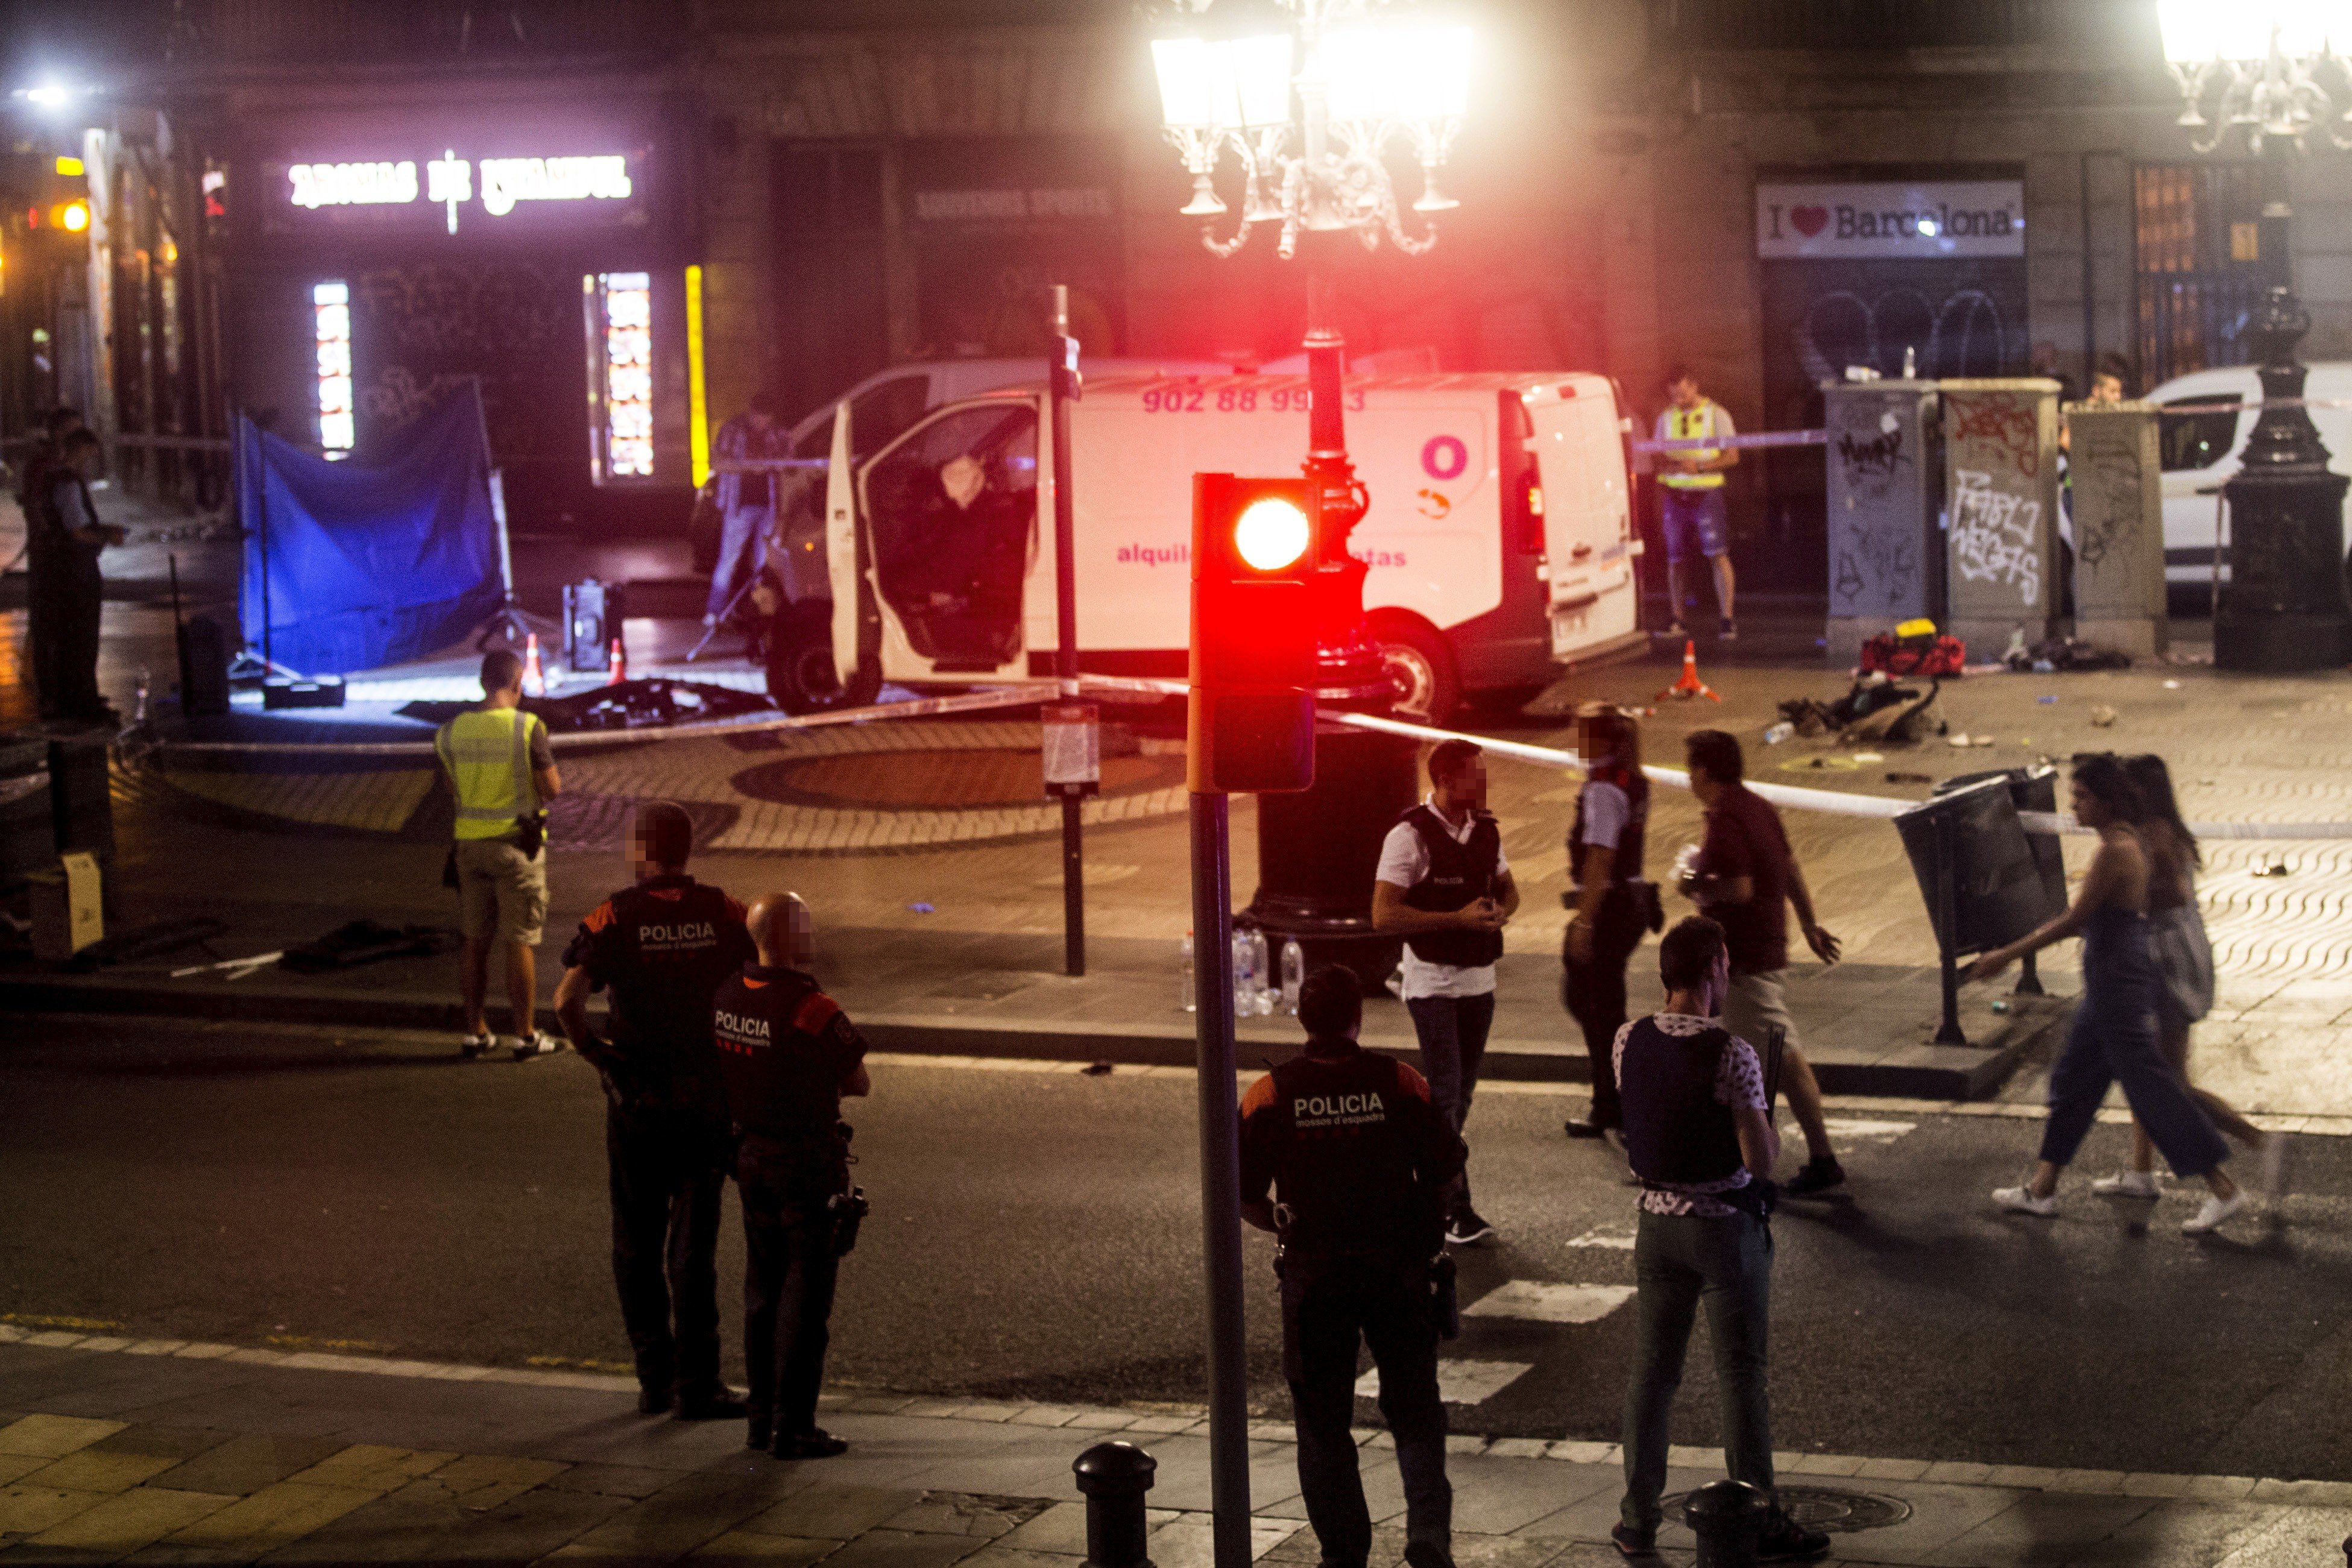 Preparations and suspicions before last year's terror attacks in Catalonia